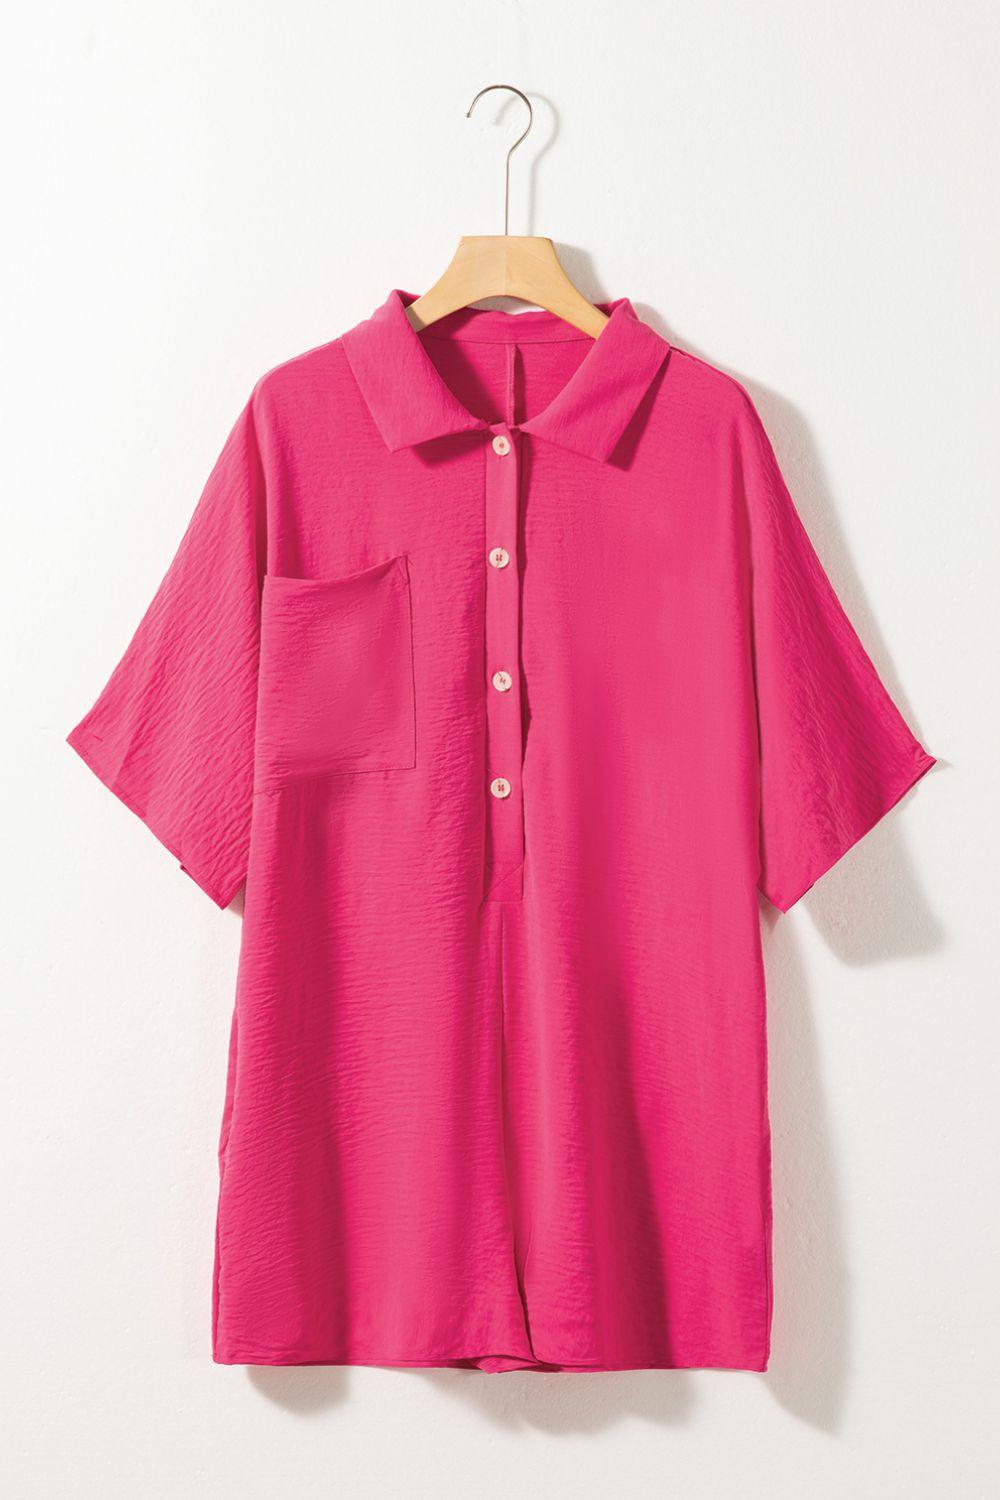 a pink shirt hanging on a hanger